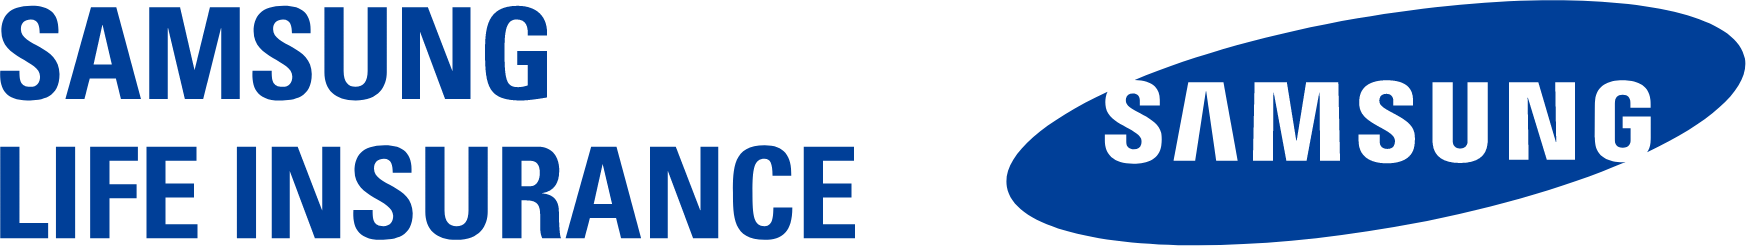 Samsung Life Insurance
 logo large (transparent PNG)